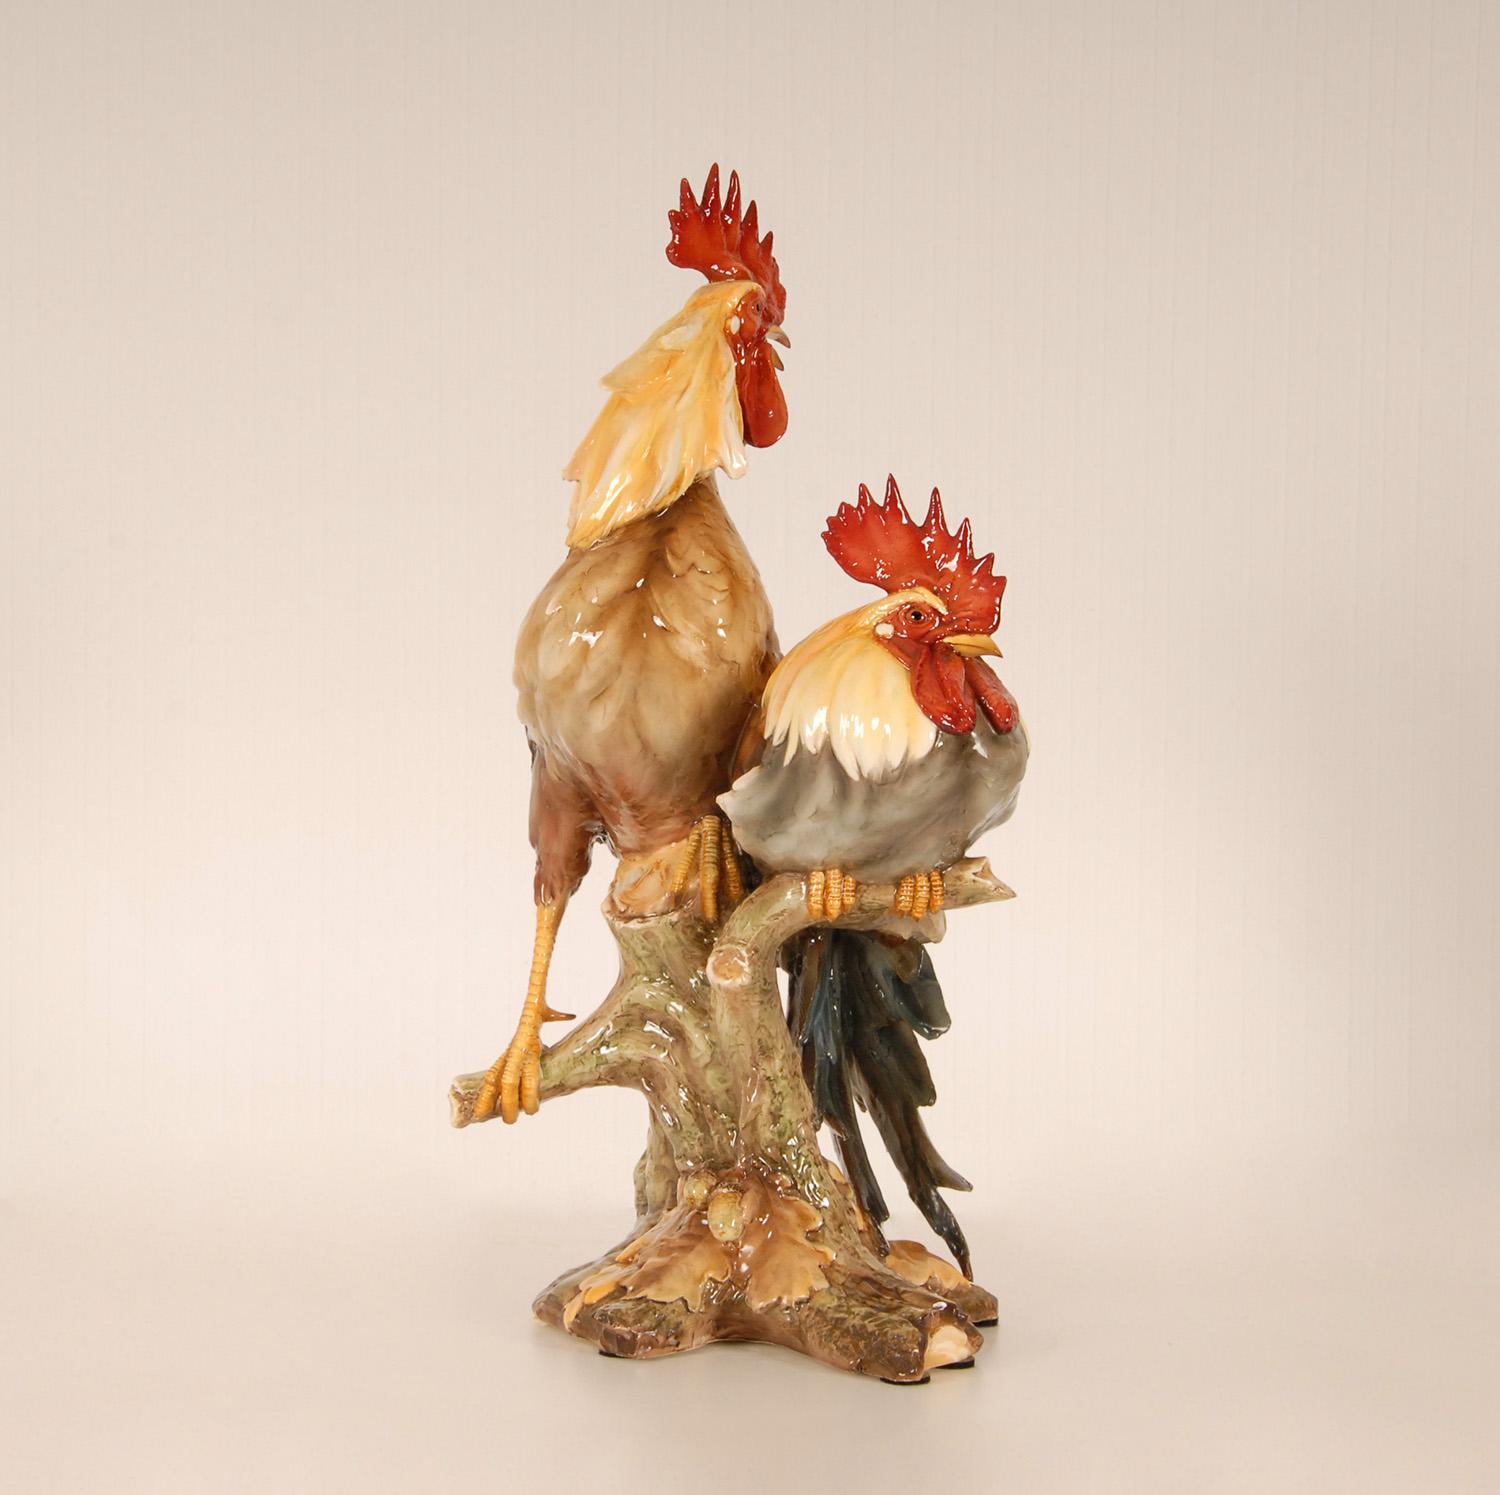 Hand-Painted Vintage Italian Porcelain Animal Figurine Rooster Ceramic Cockerel Bird Figure